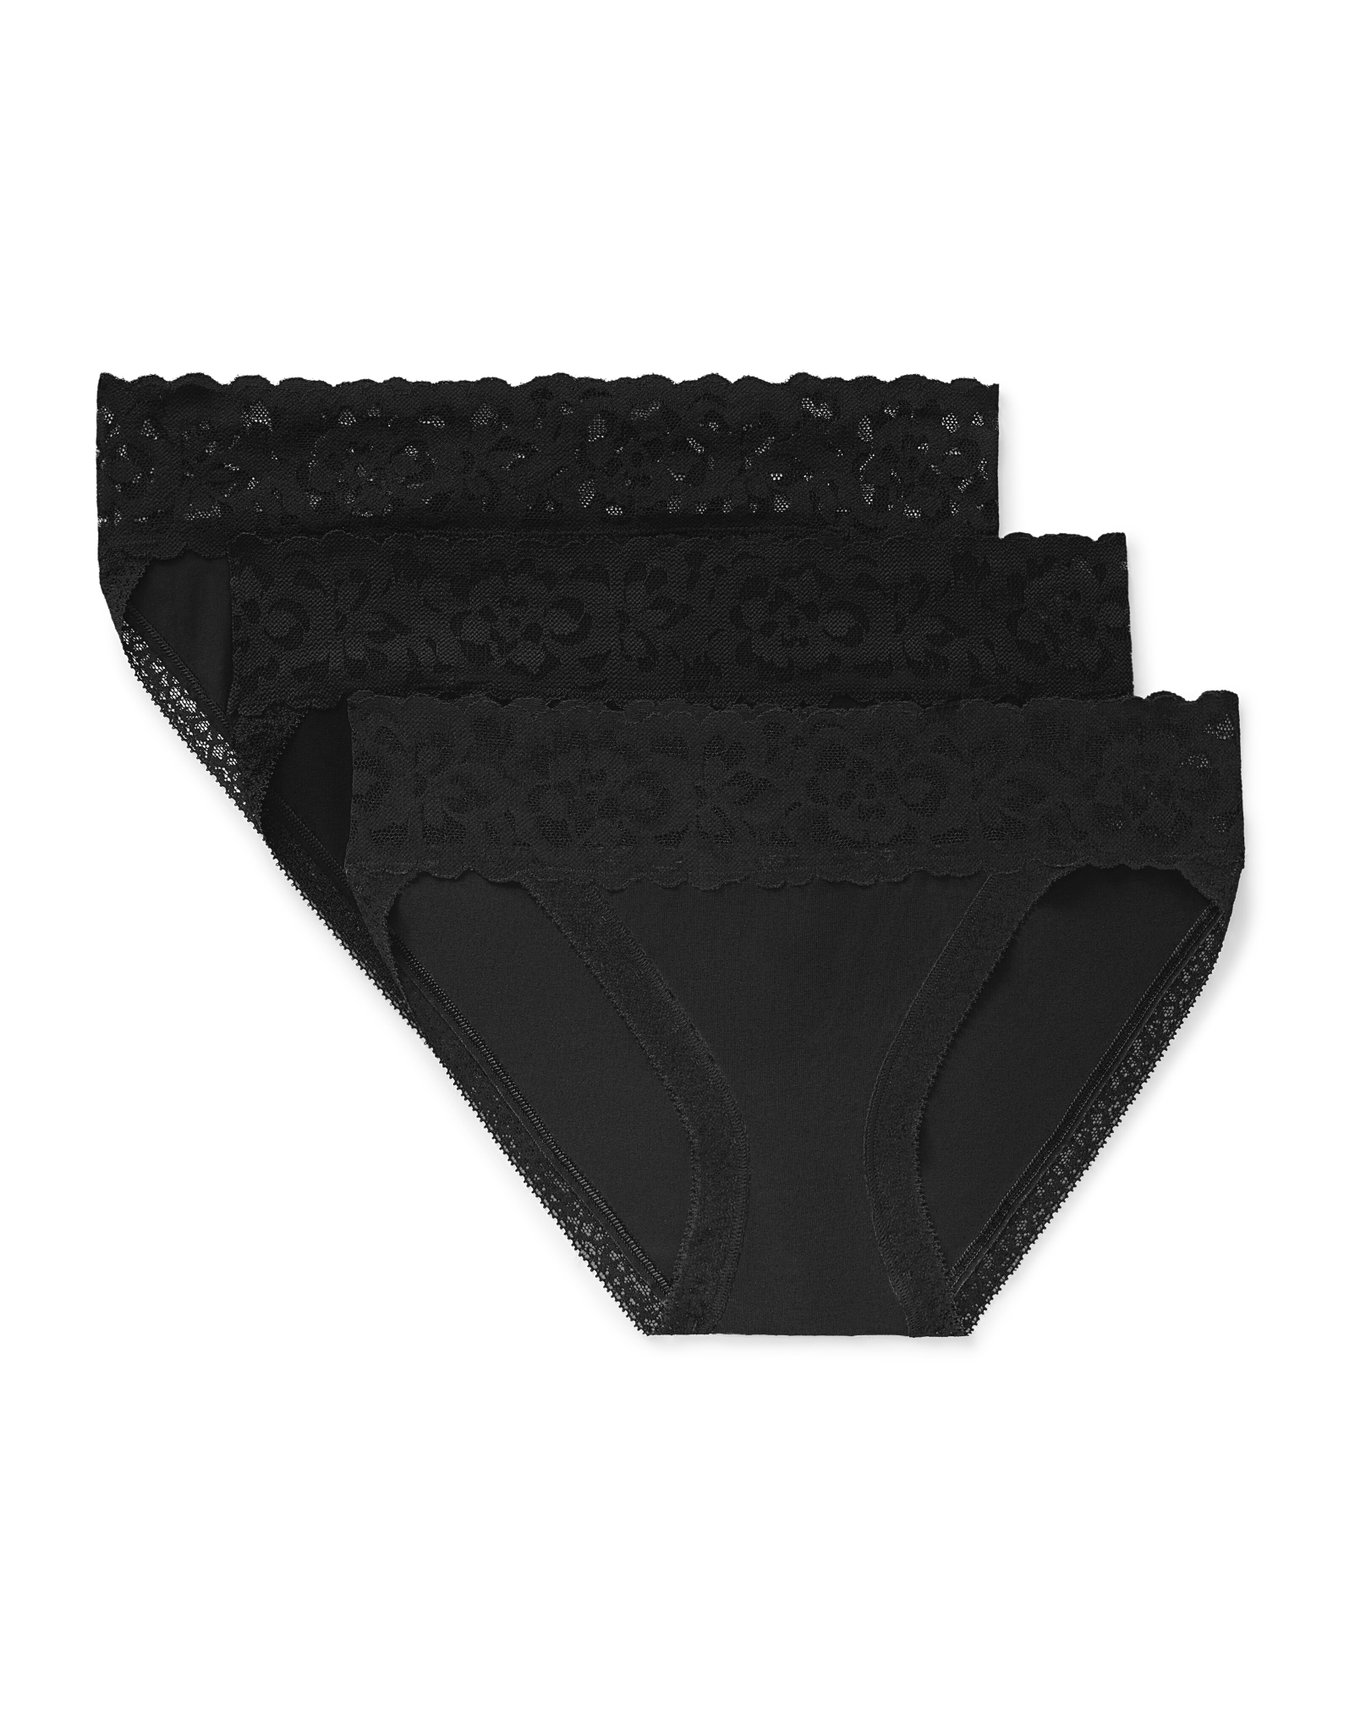 Everlane Black XS Cotton Bikini Panty New